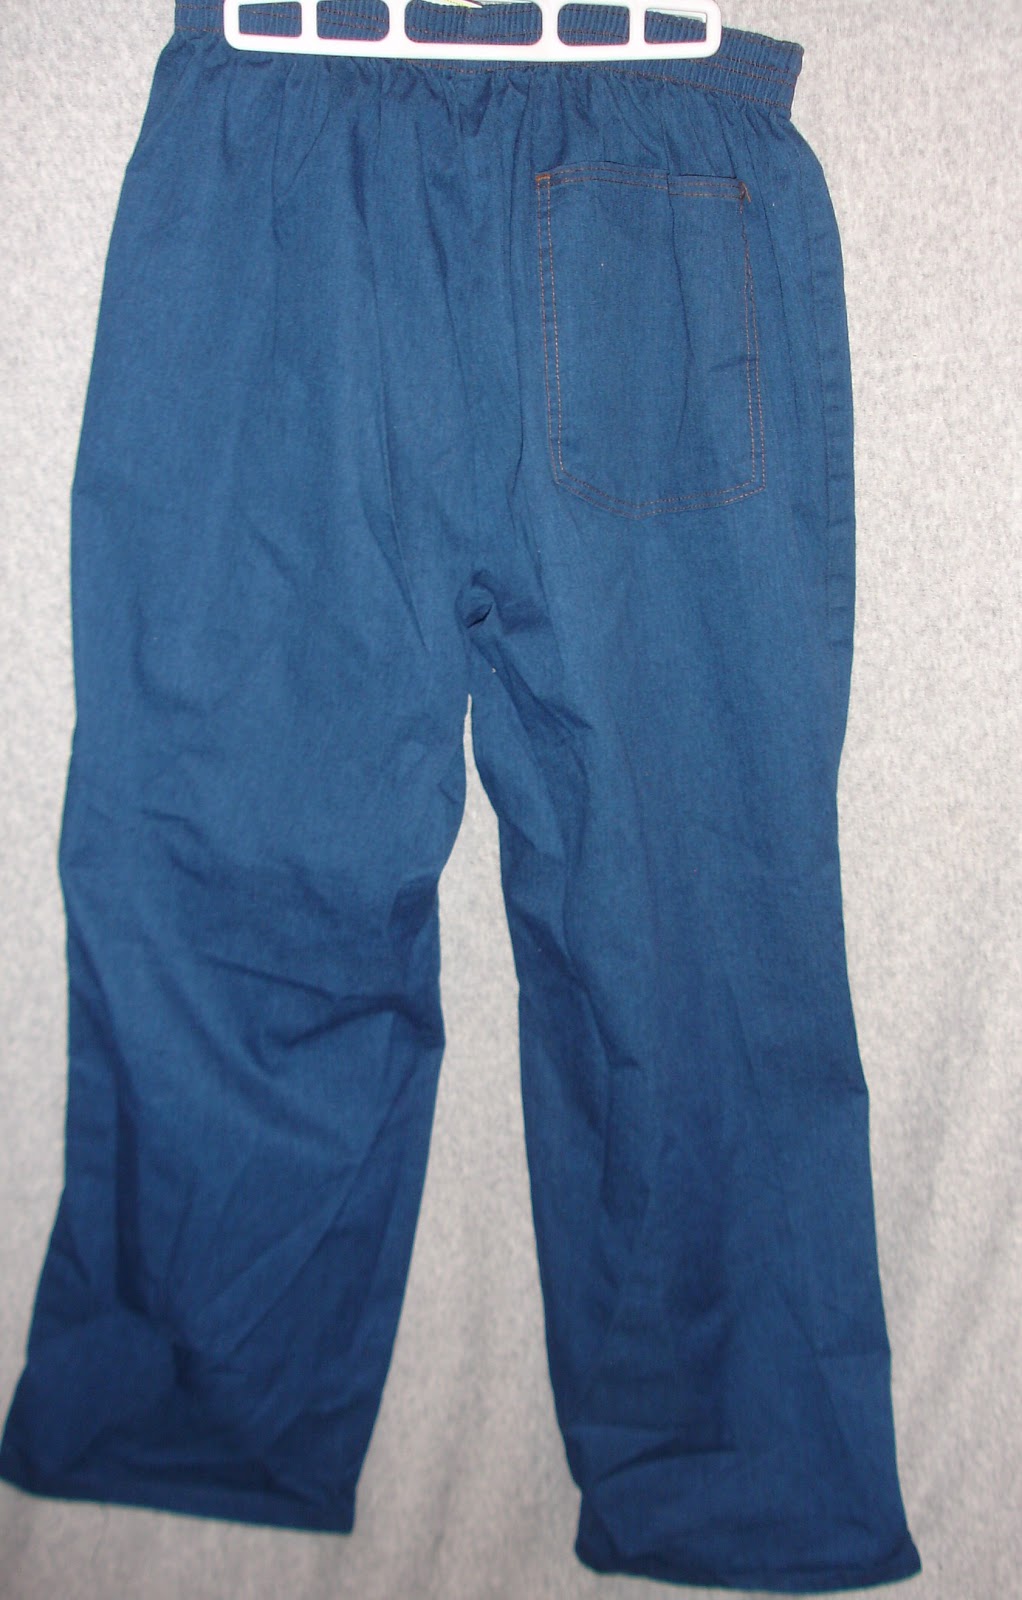 Prison Stuff eBay Won't Let Me Sell: CDCR CAL P.I.A. Prison Pants NEW ...